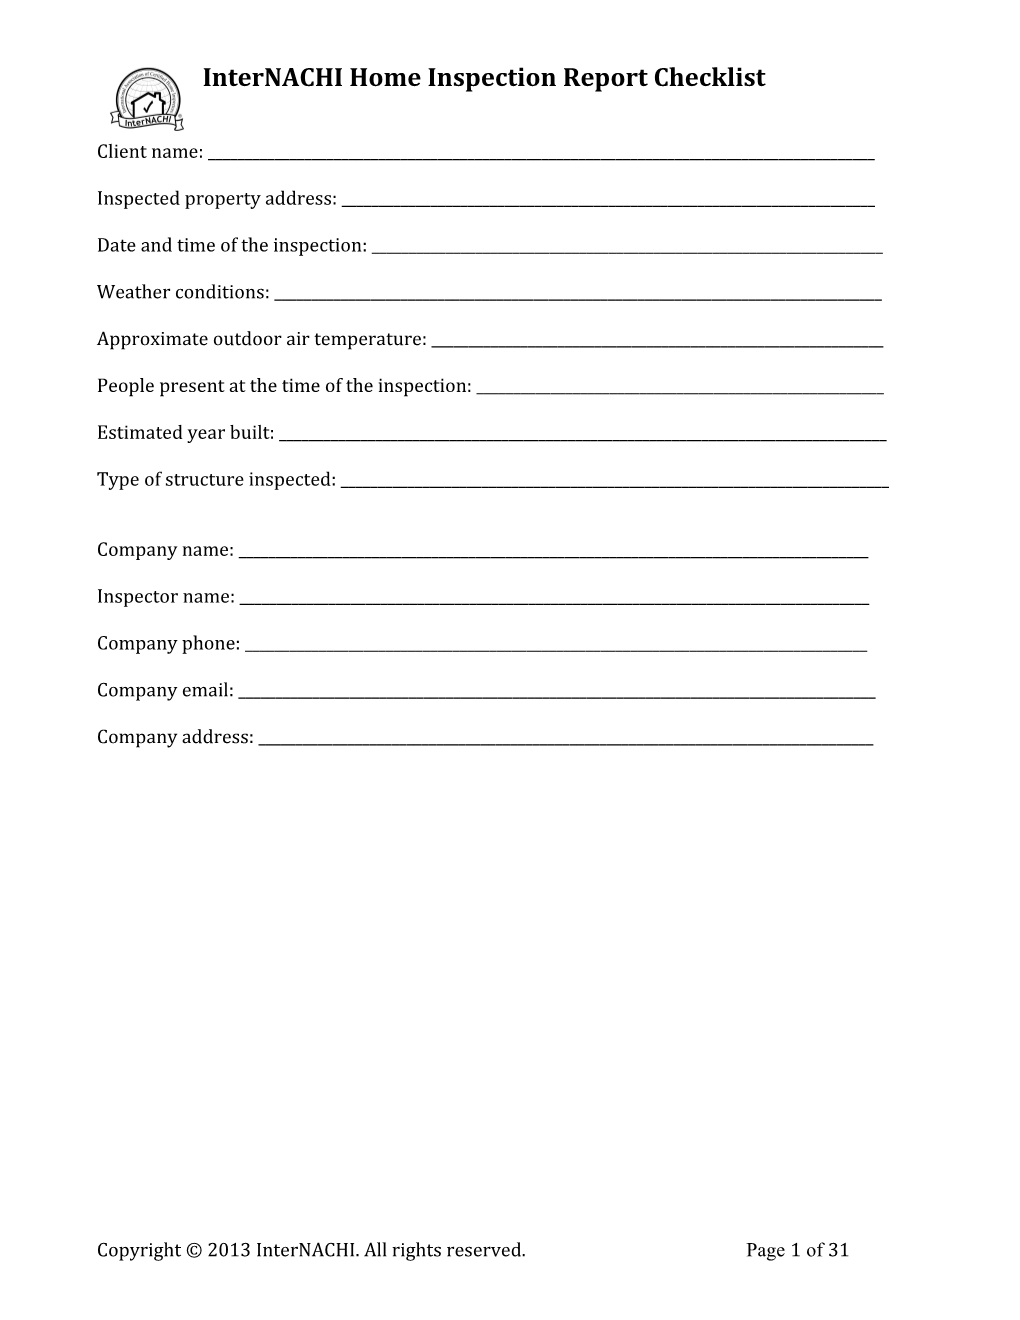 Internachi Home Inspection Report Checklist